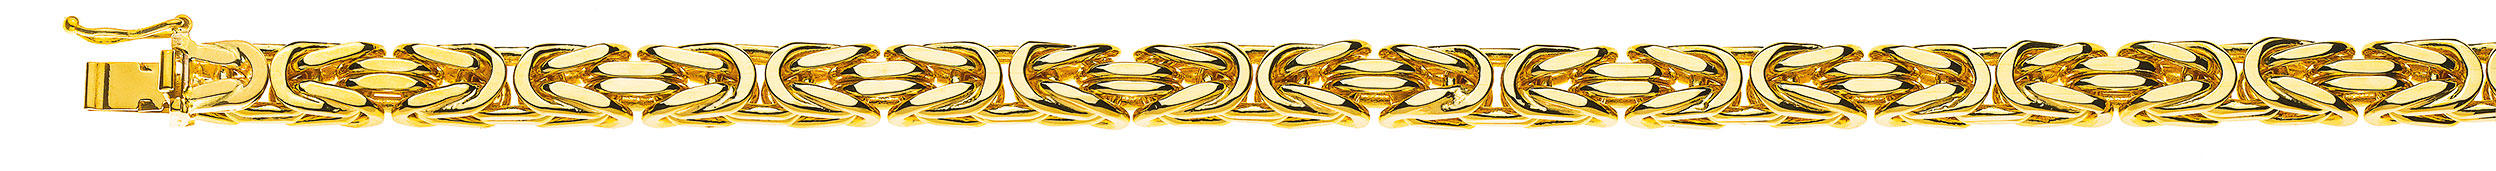 AURONOS Prestige Armband 18k Gelbgold Königskette 5mm 19cm 